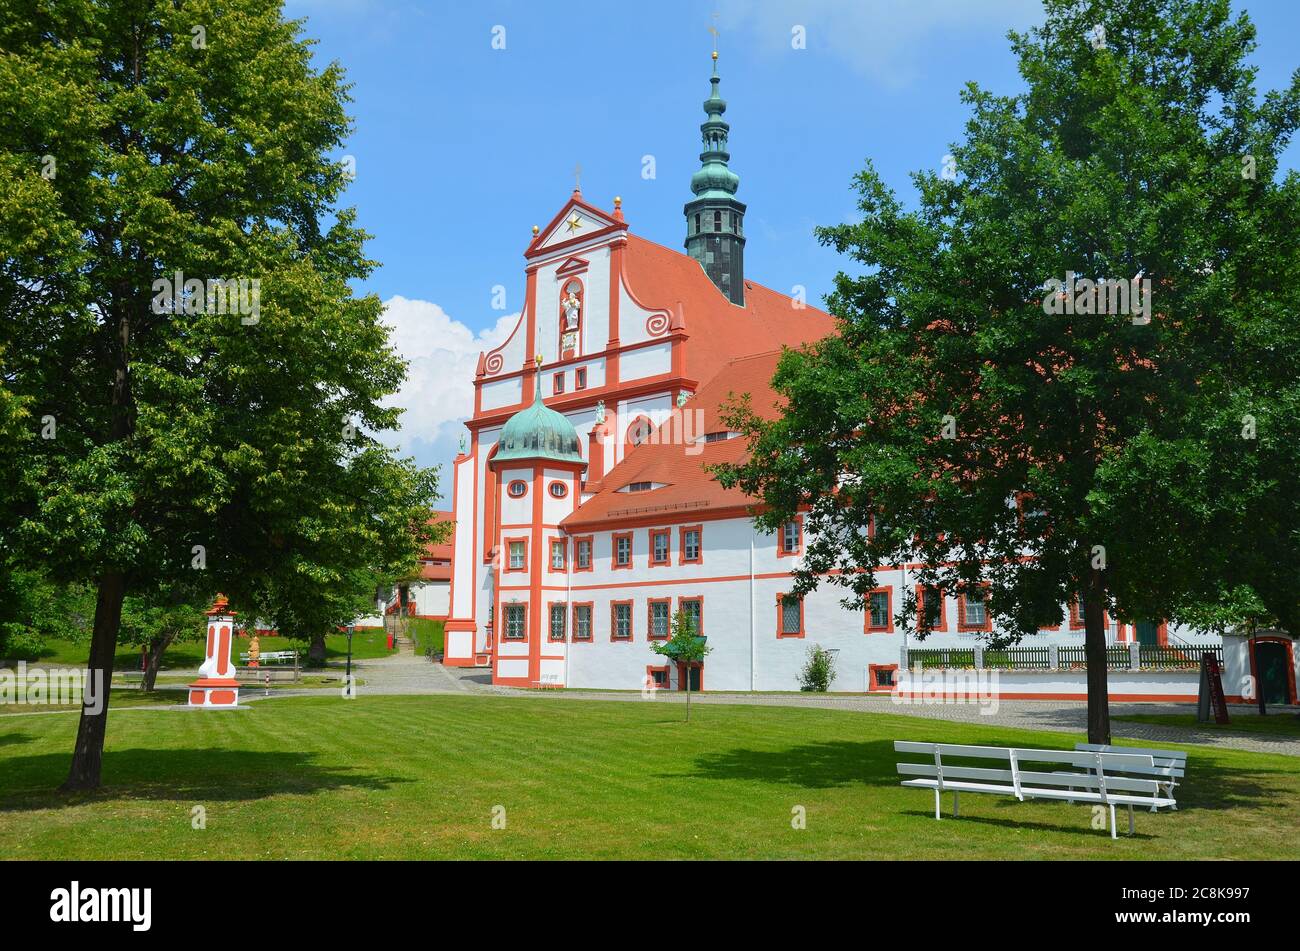 Panschwitz-Kuckau, Pancracy-Kukow, dans le Oberlaussitz, Sachsen, Allemagne Banque D'Images